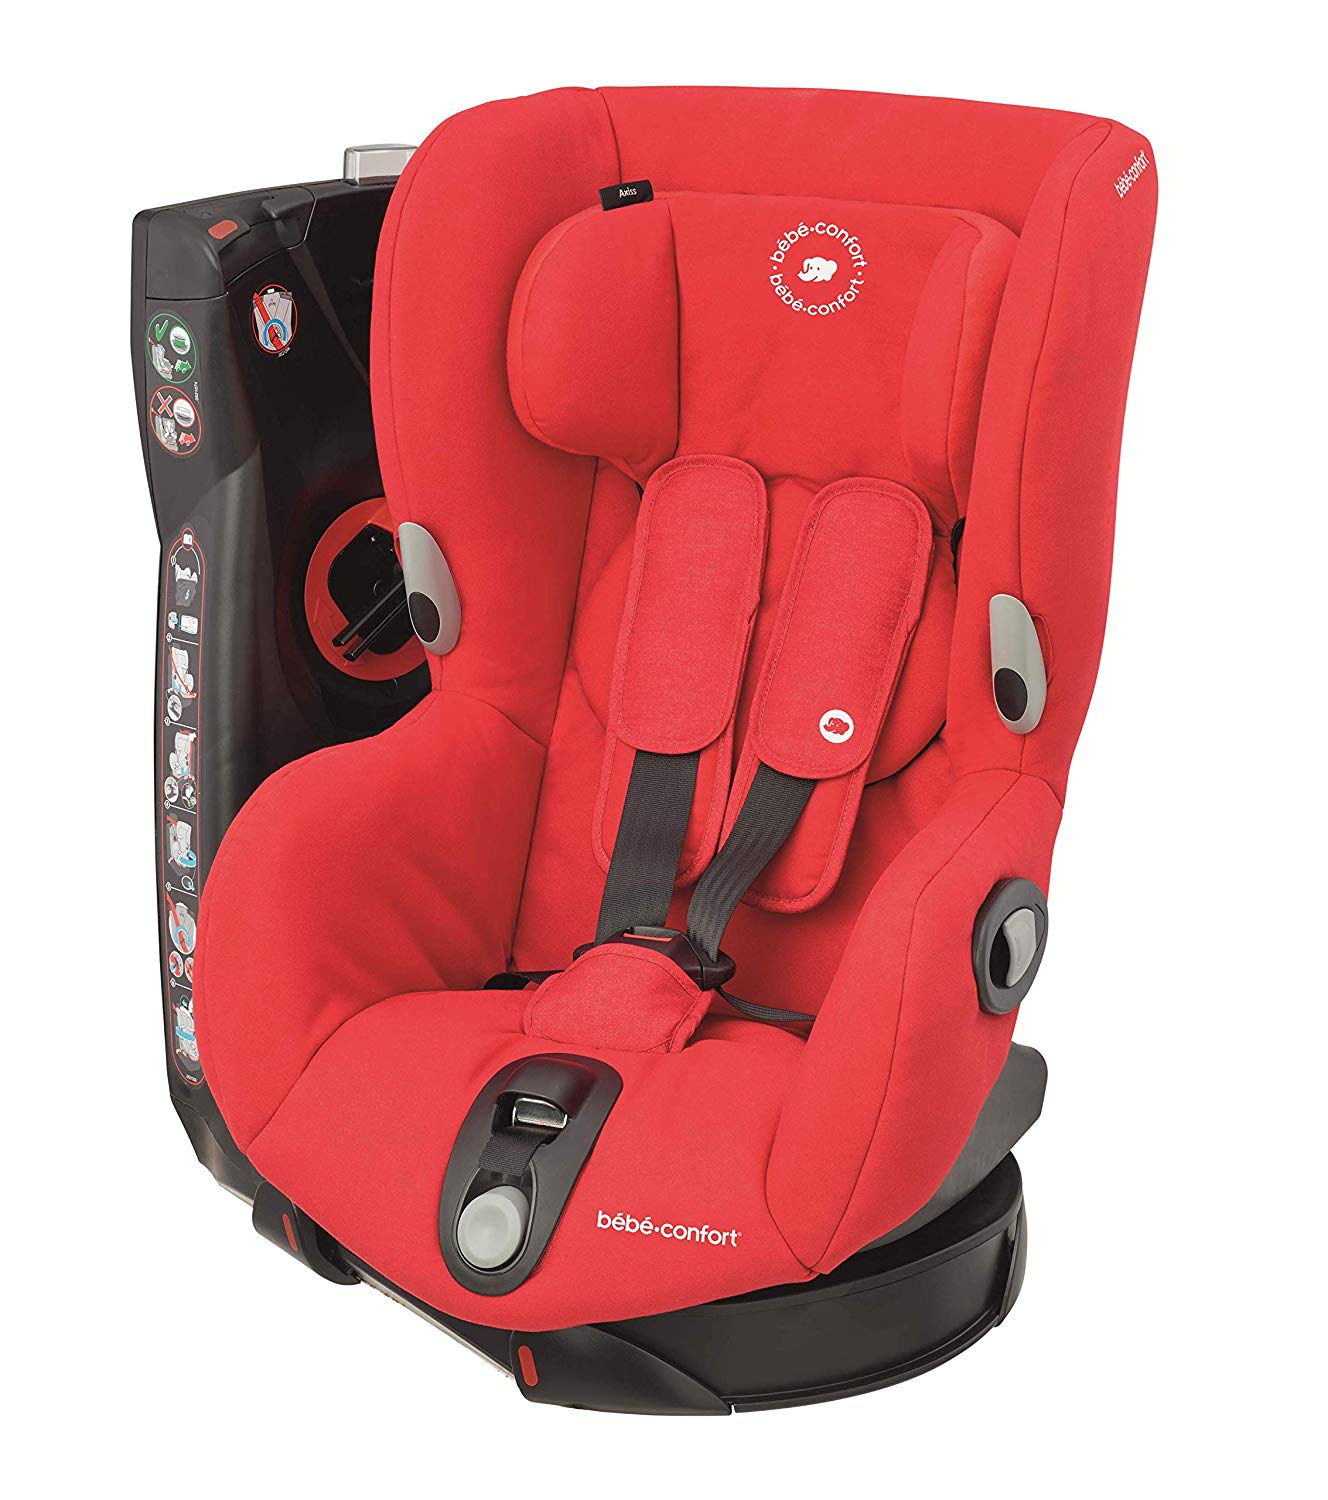 Sillita de coche Bébé Confort AXISS Nomad Red solo 140€